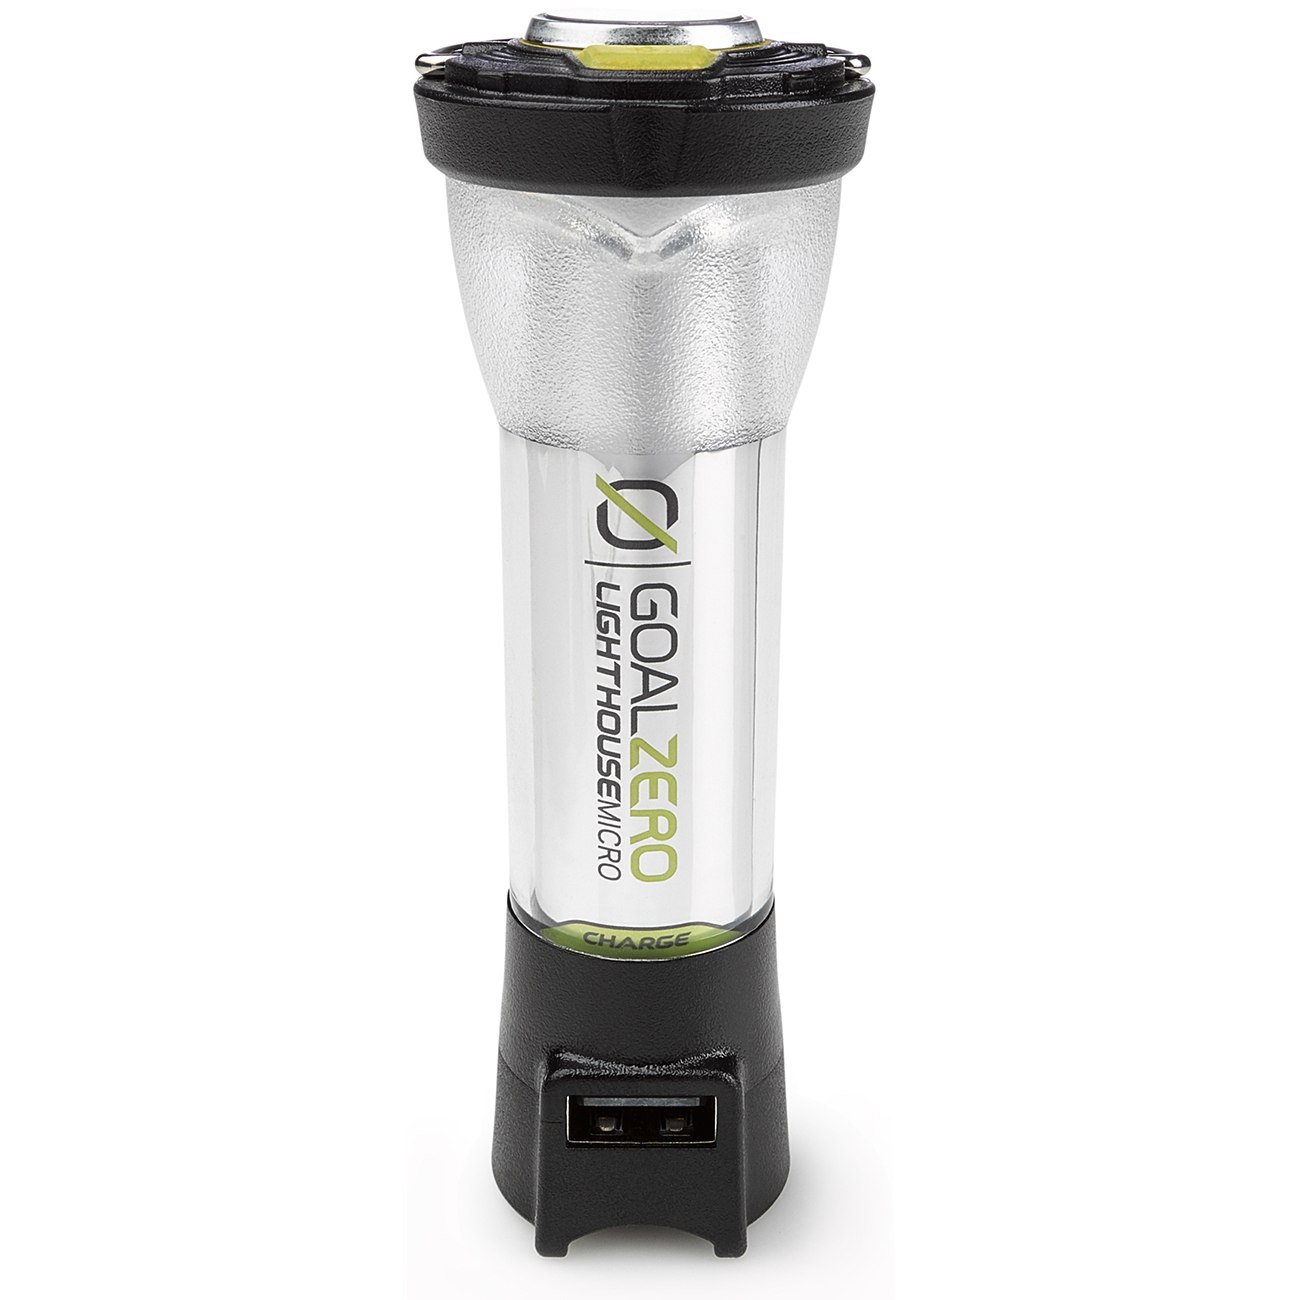 Immagine prodotto da Goal Zero Lanterna Campeggio LED -  Lighthouse Micro Charge USB Rechargeable